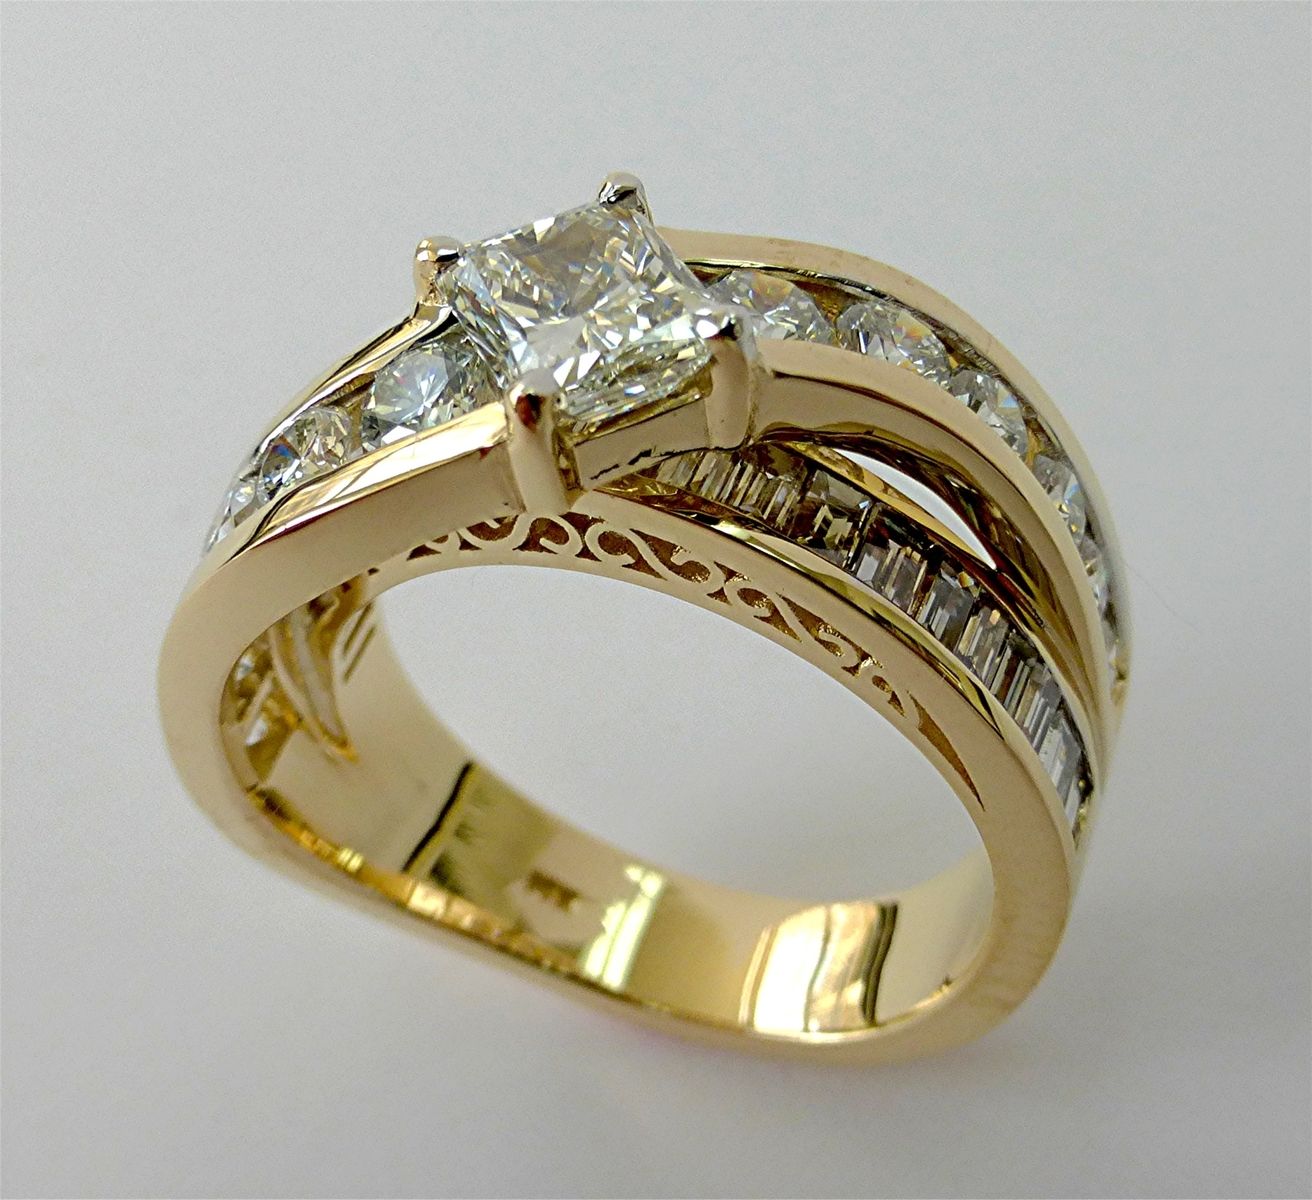 16 Examples Of Beautiful Diamond Jewelry Designs ...